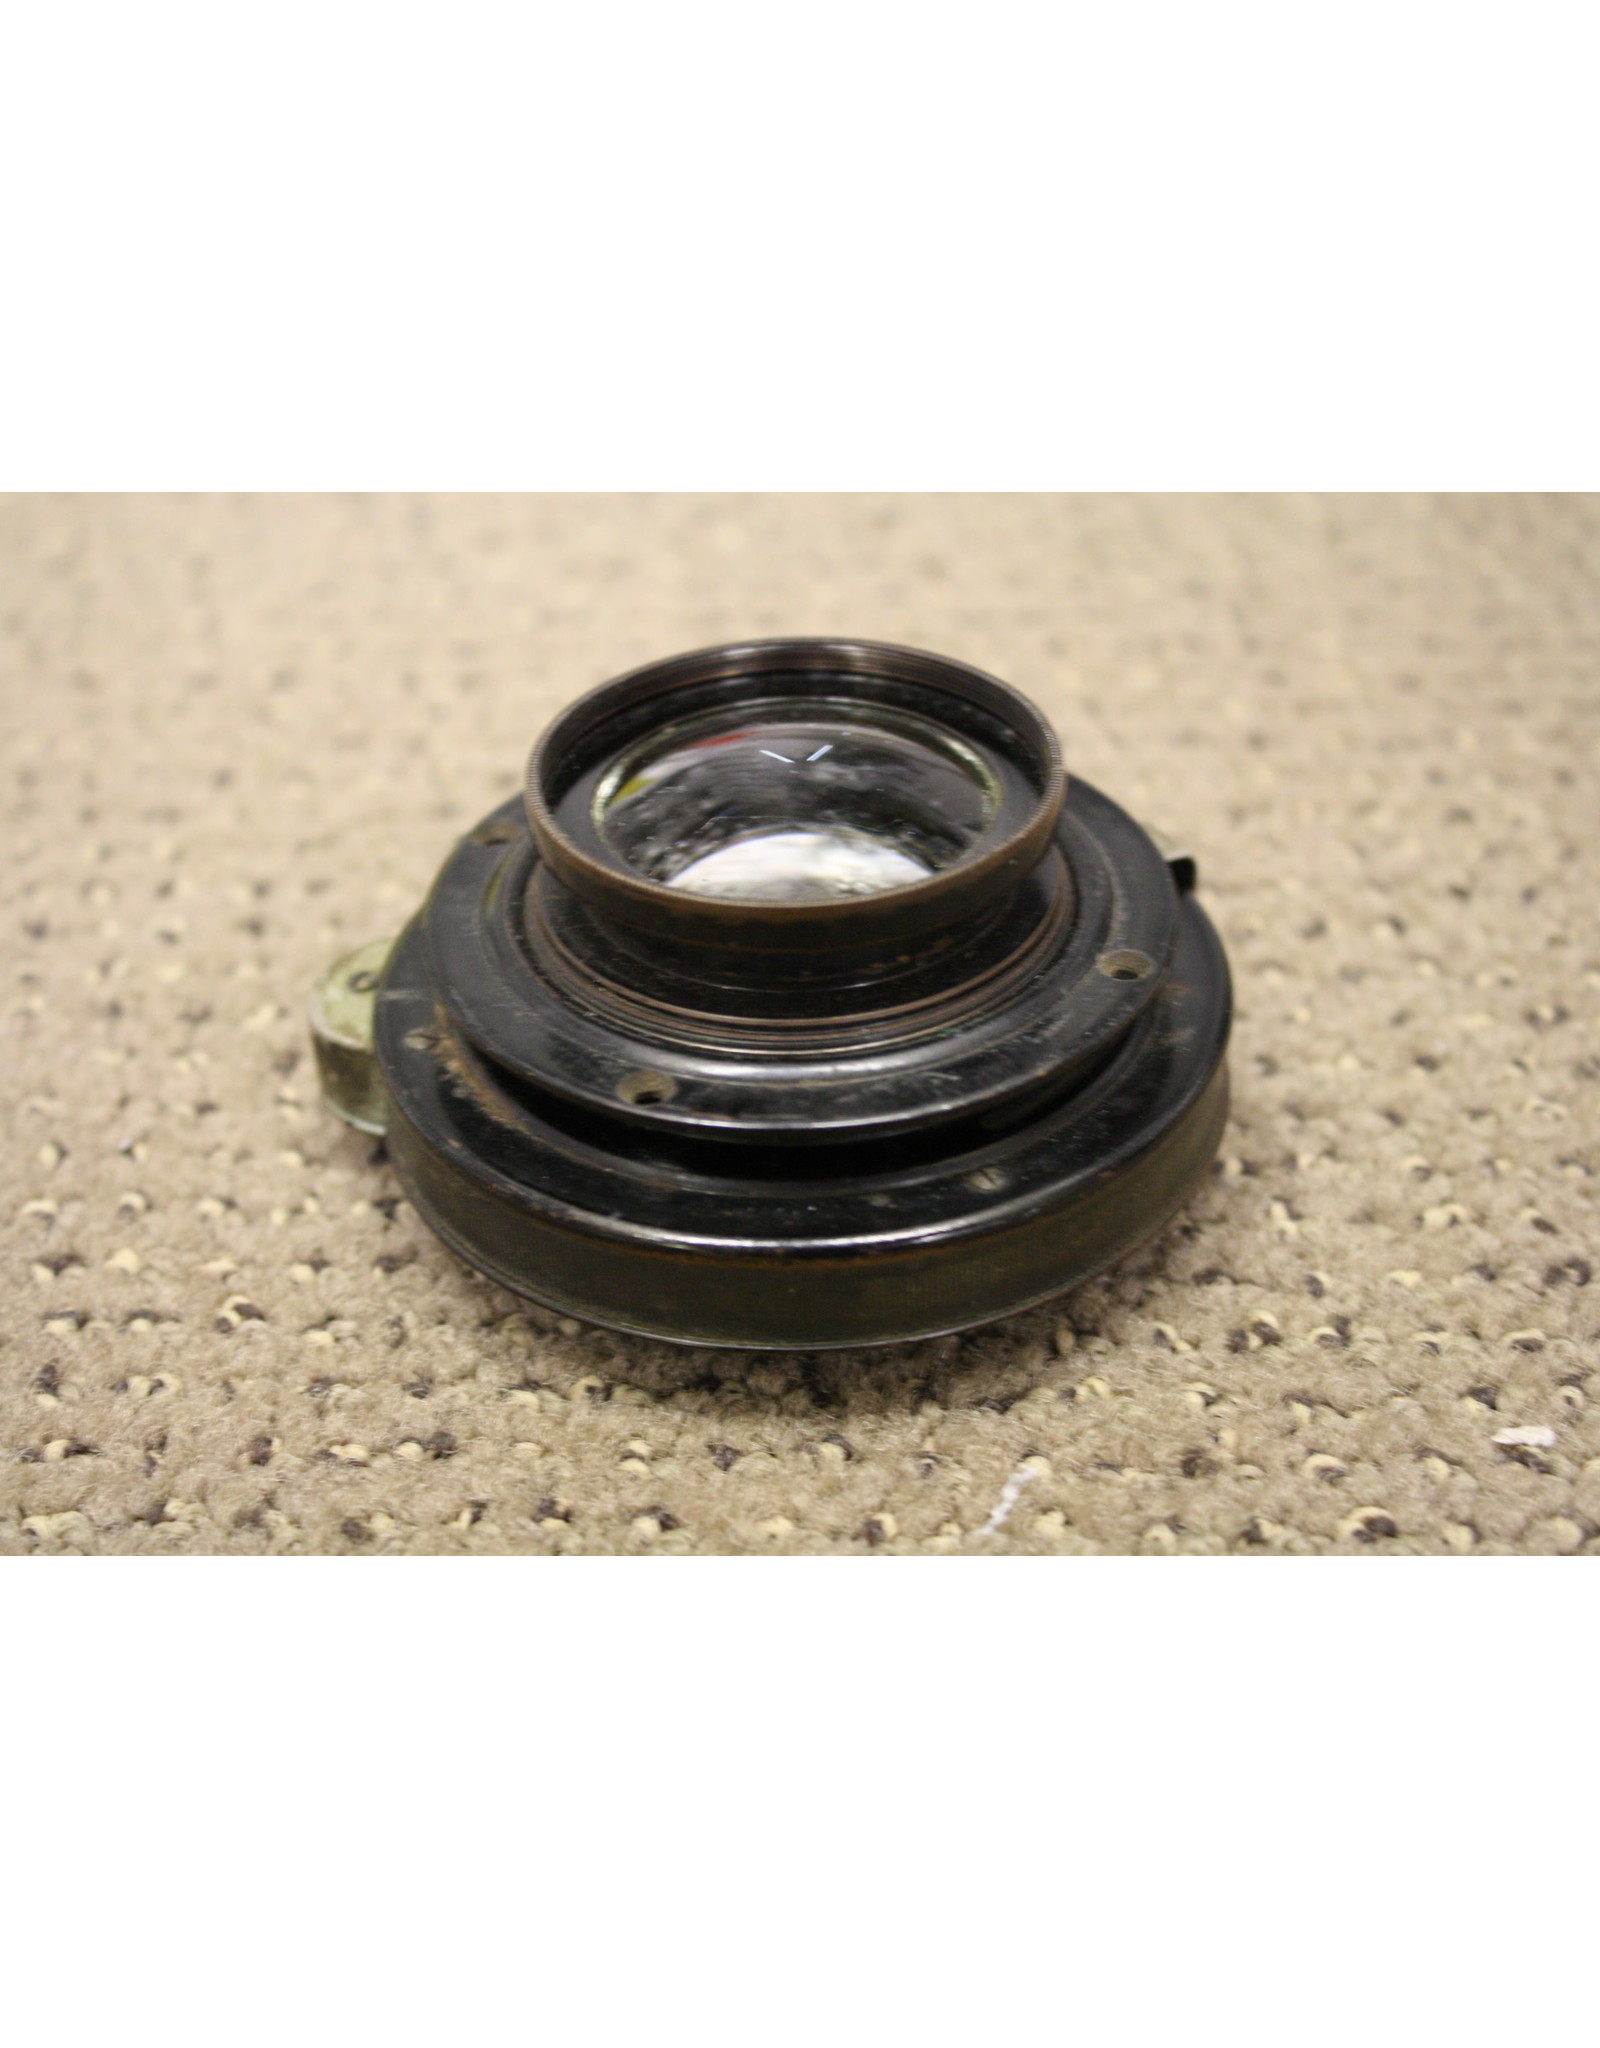 Vintage C.P. Goerz Dagor in Dial Compound Shutter Lens